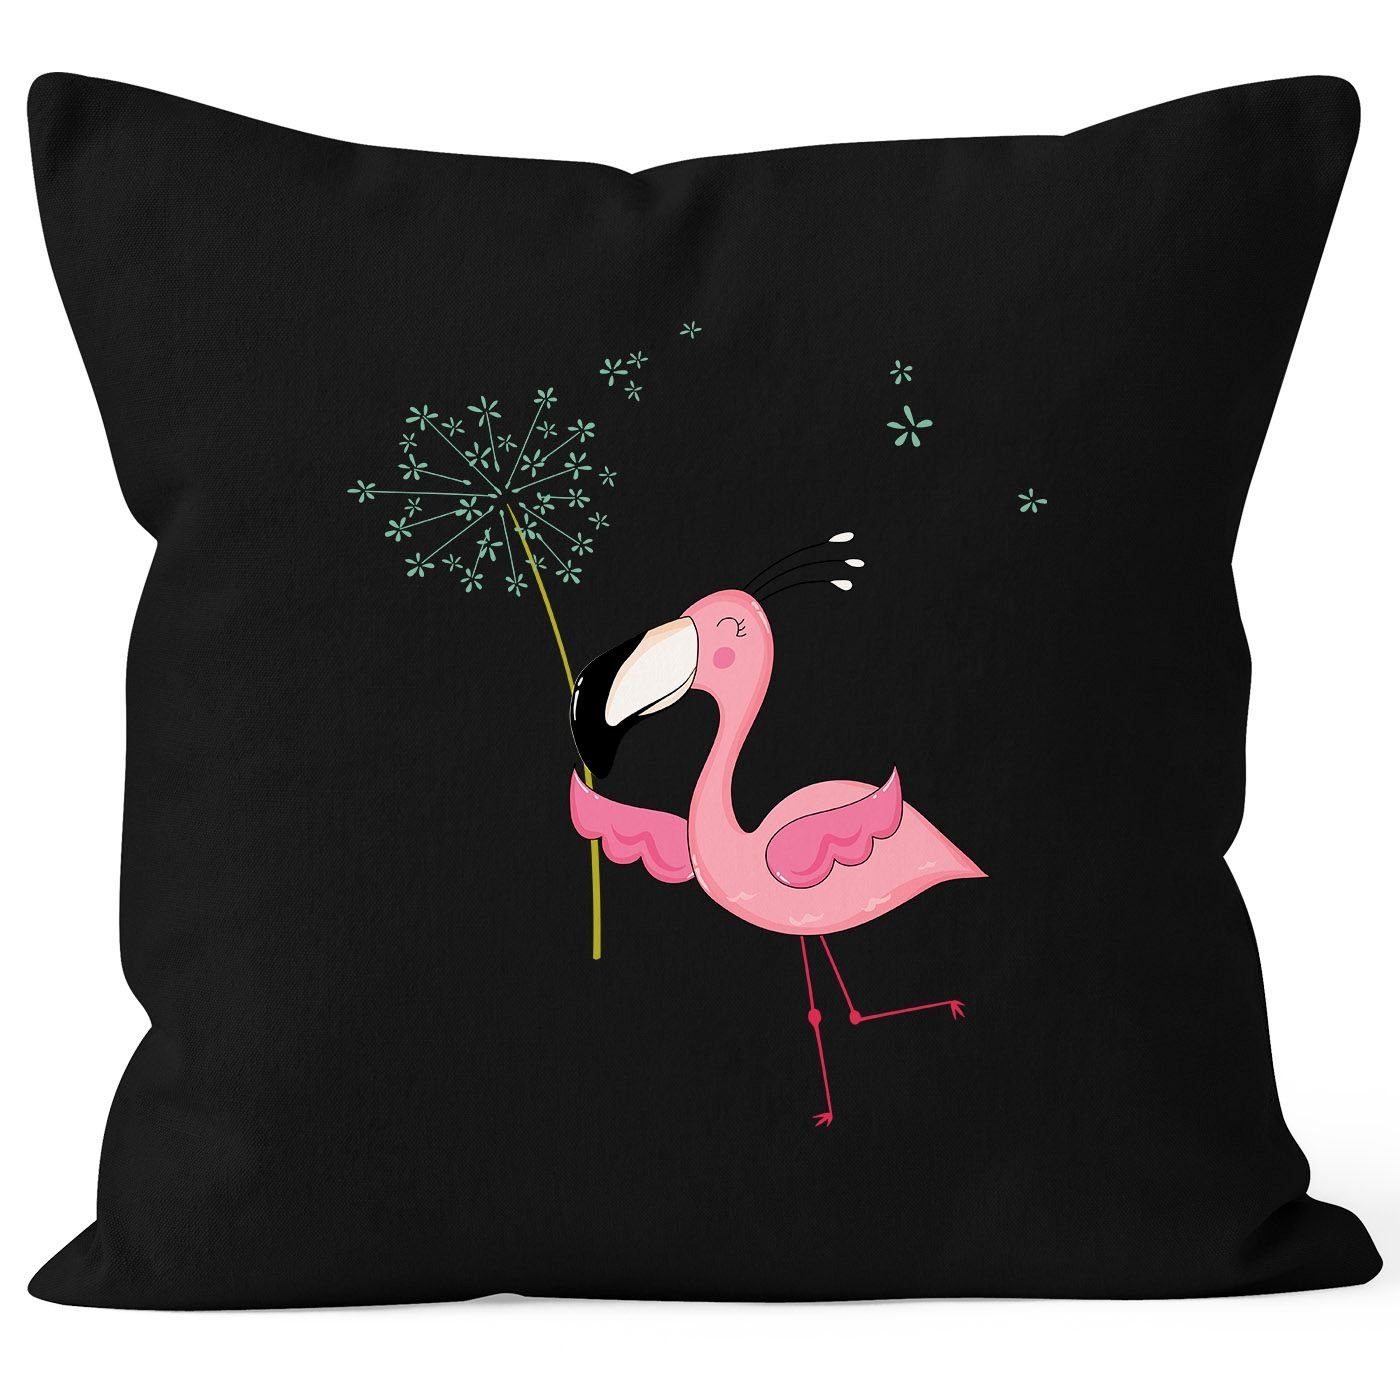 MoonWorks Dekokissen Kissen-Bezug Flamingo Pusteblume Dandelion Kissen-Hülle Deko-Kissen Baumwolle MoonWorks® schwarz